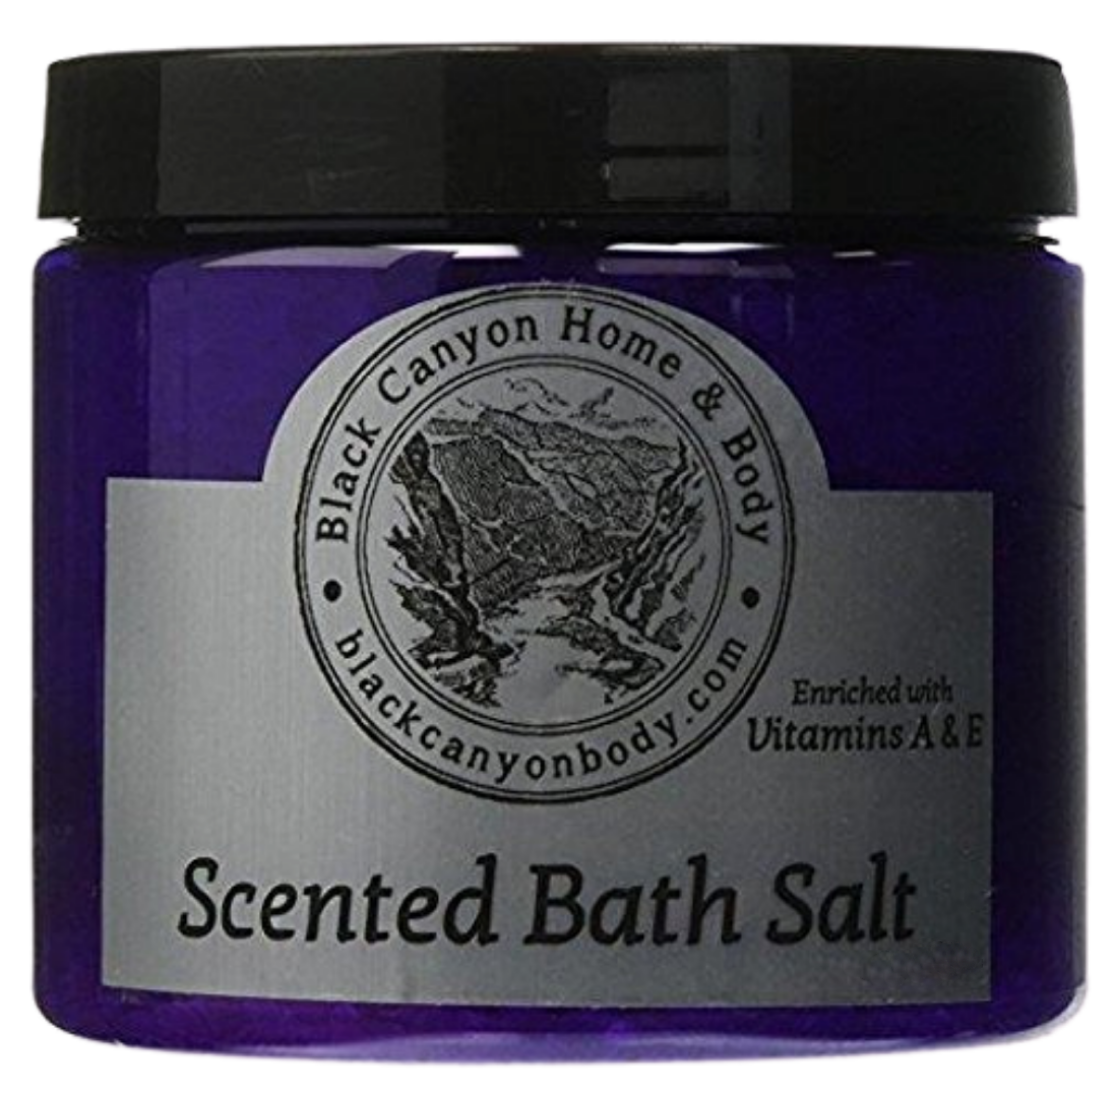 Black Canyon Vanilla Santal Scented Sea Salt Bath Soak